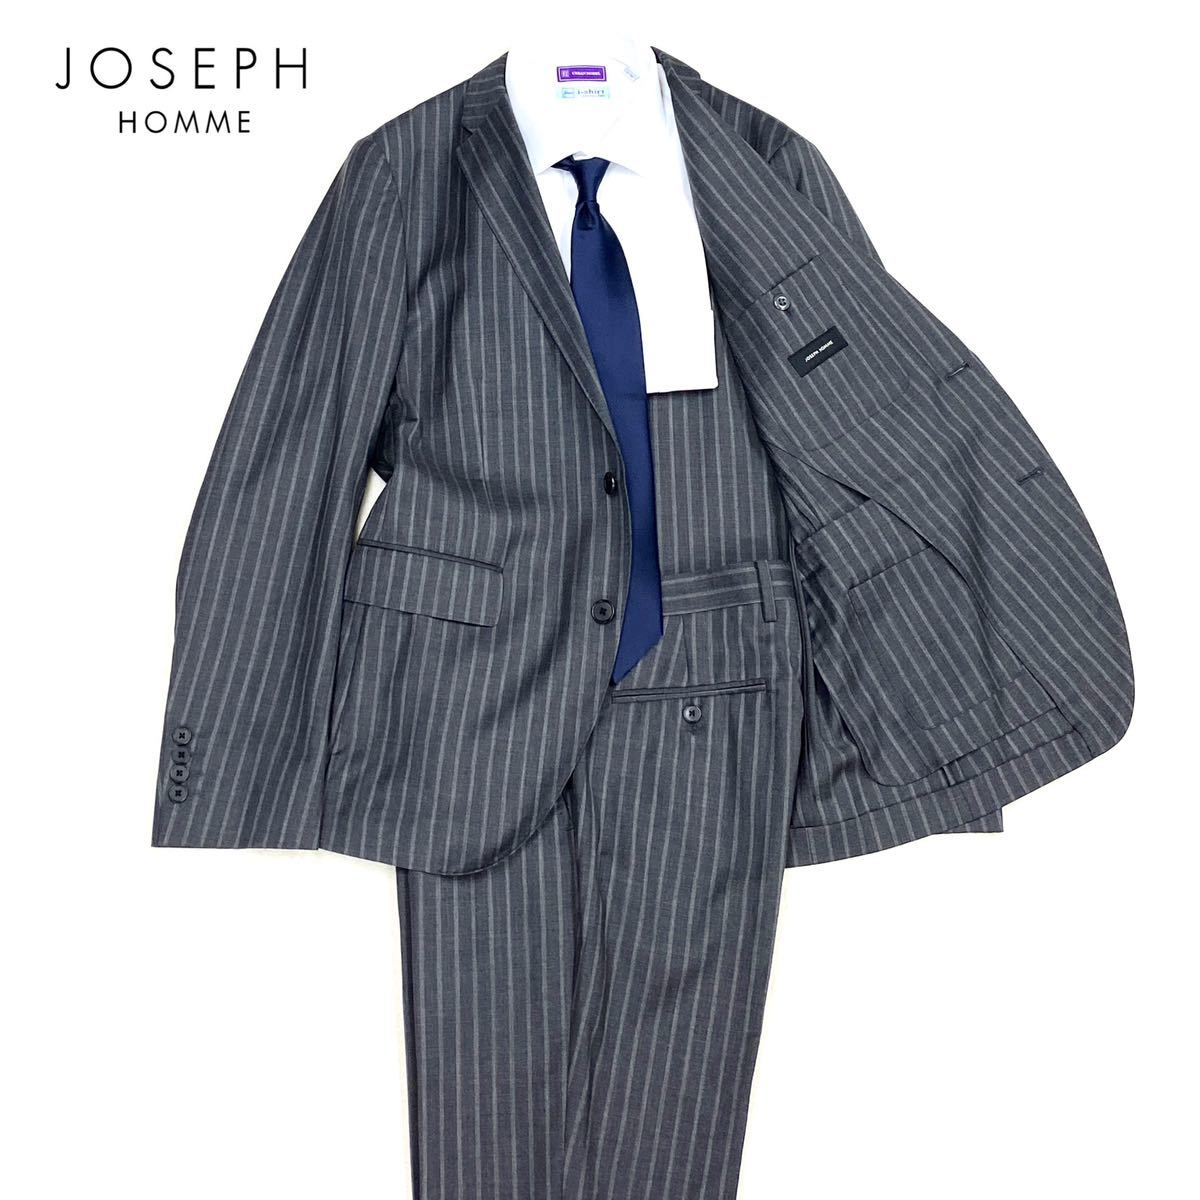 Yahoo!オークション -「joseph homme スーツ」の落札相場・落札価格